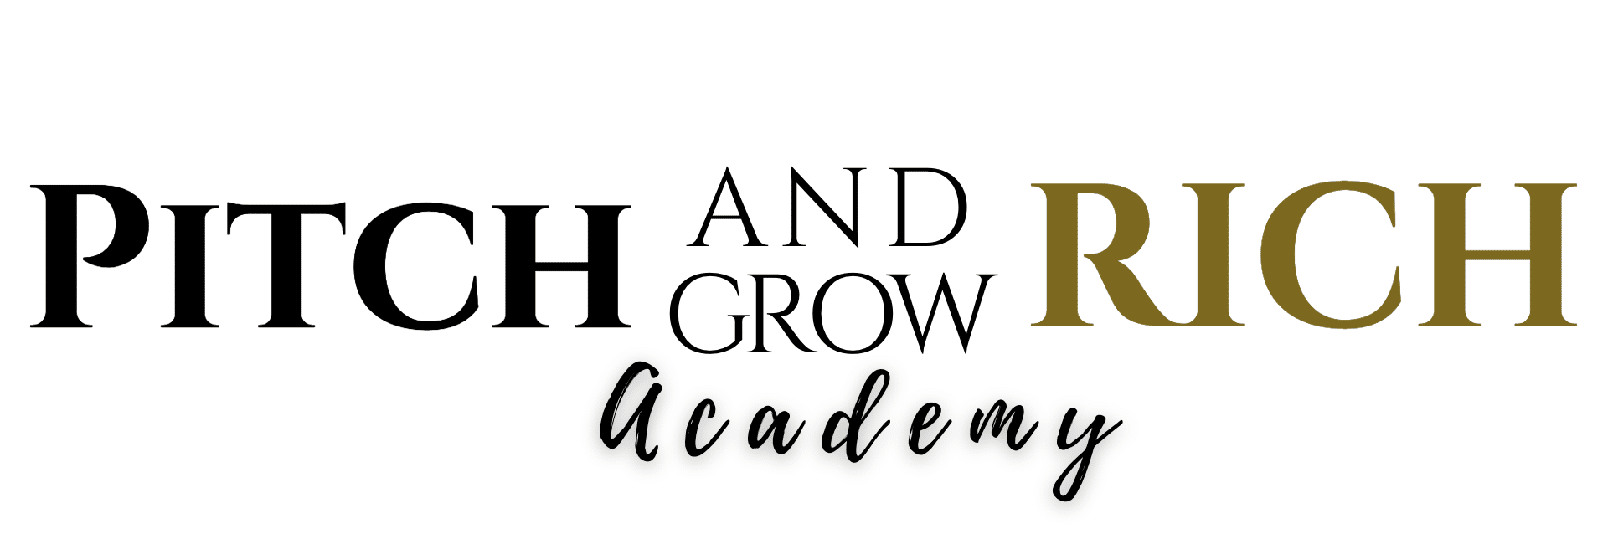 Pitch & Grow Rich Academy